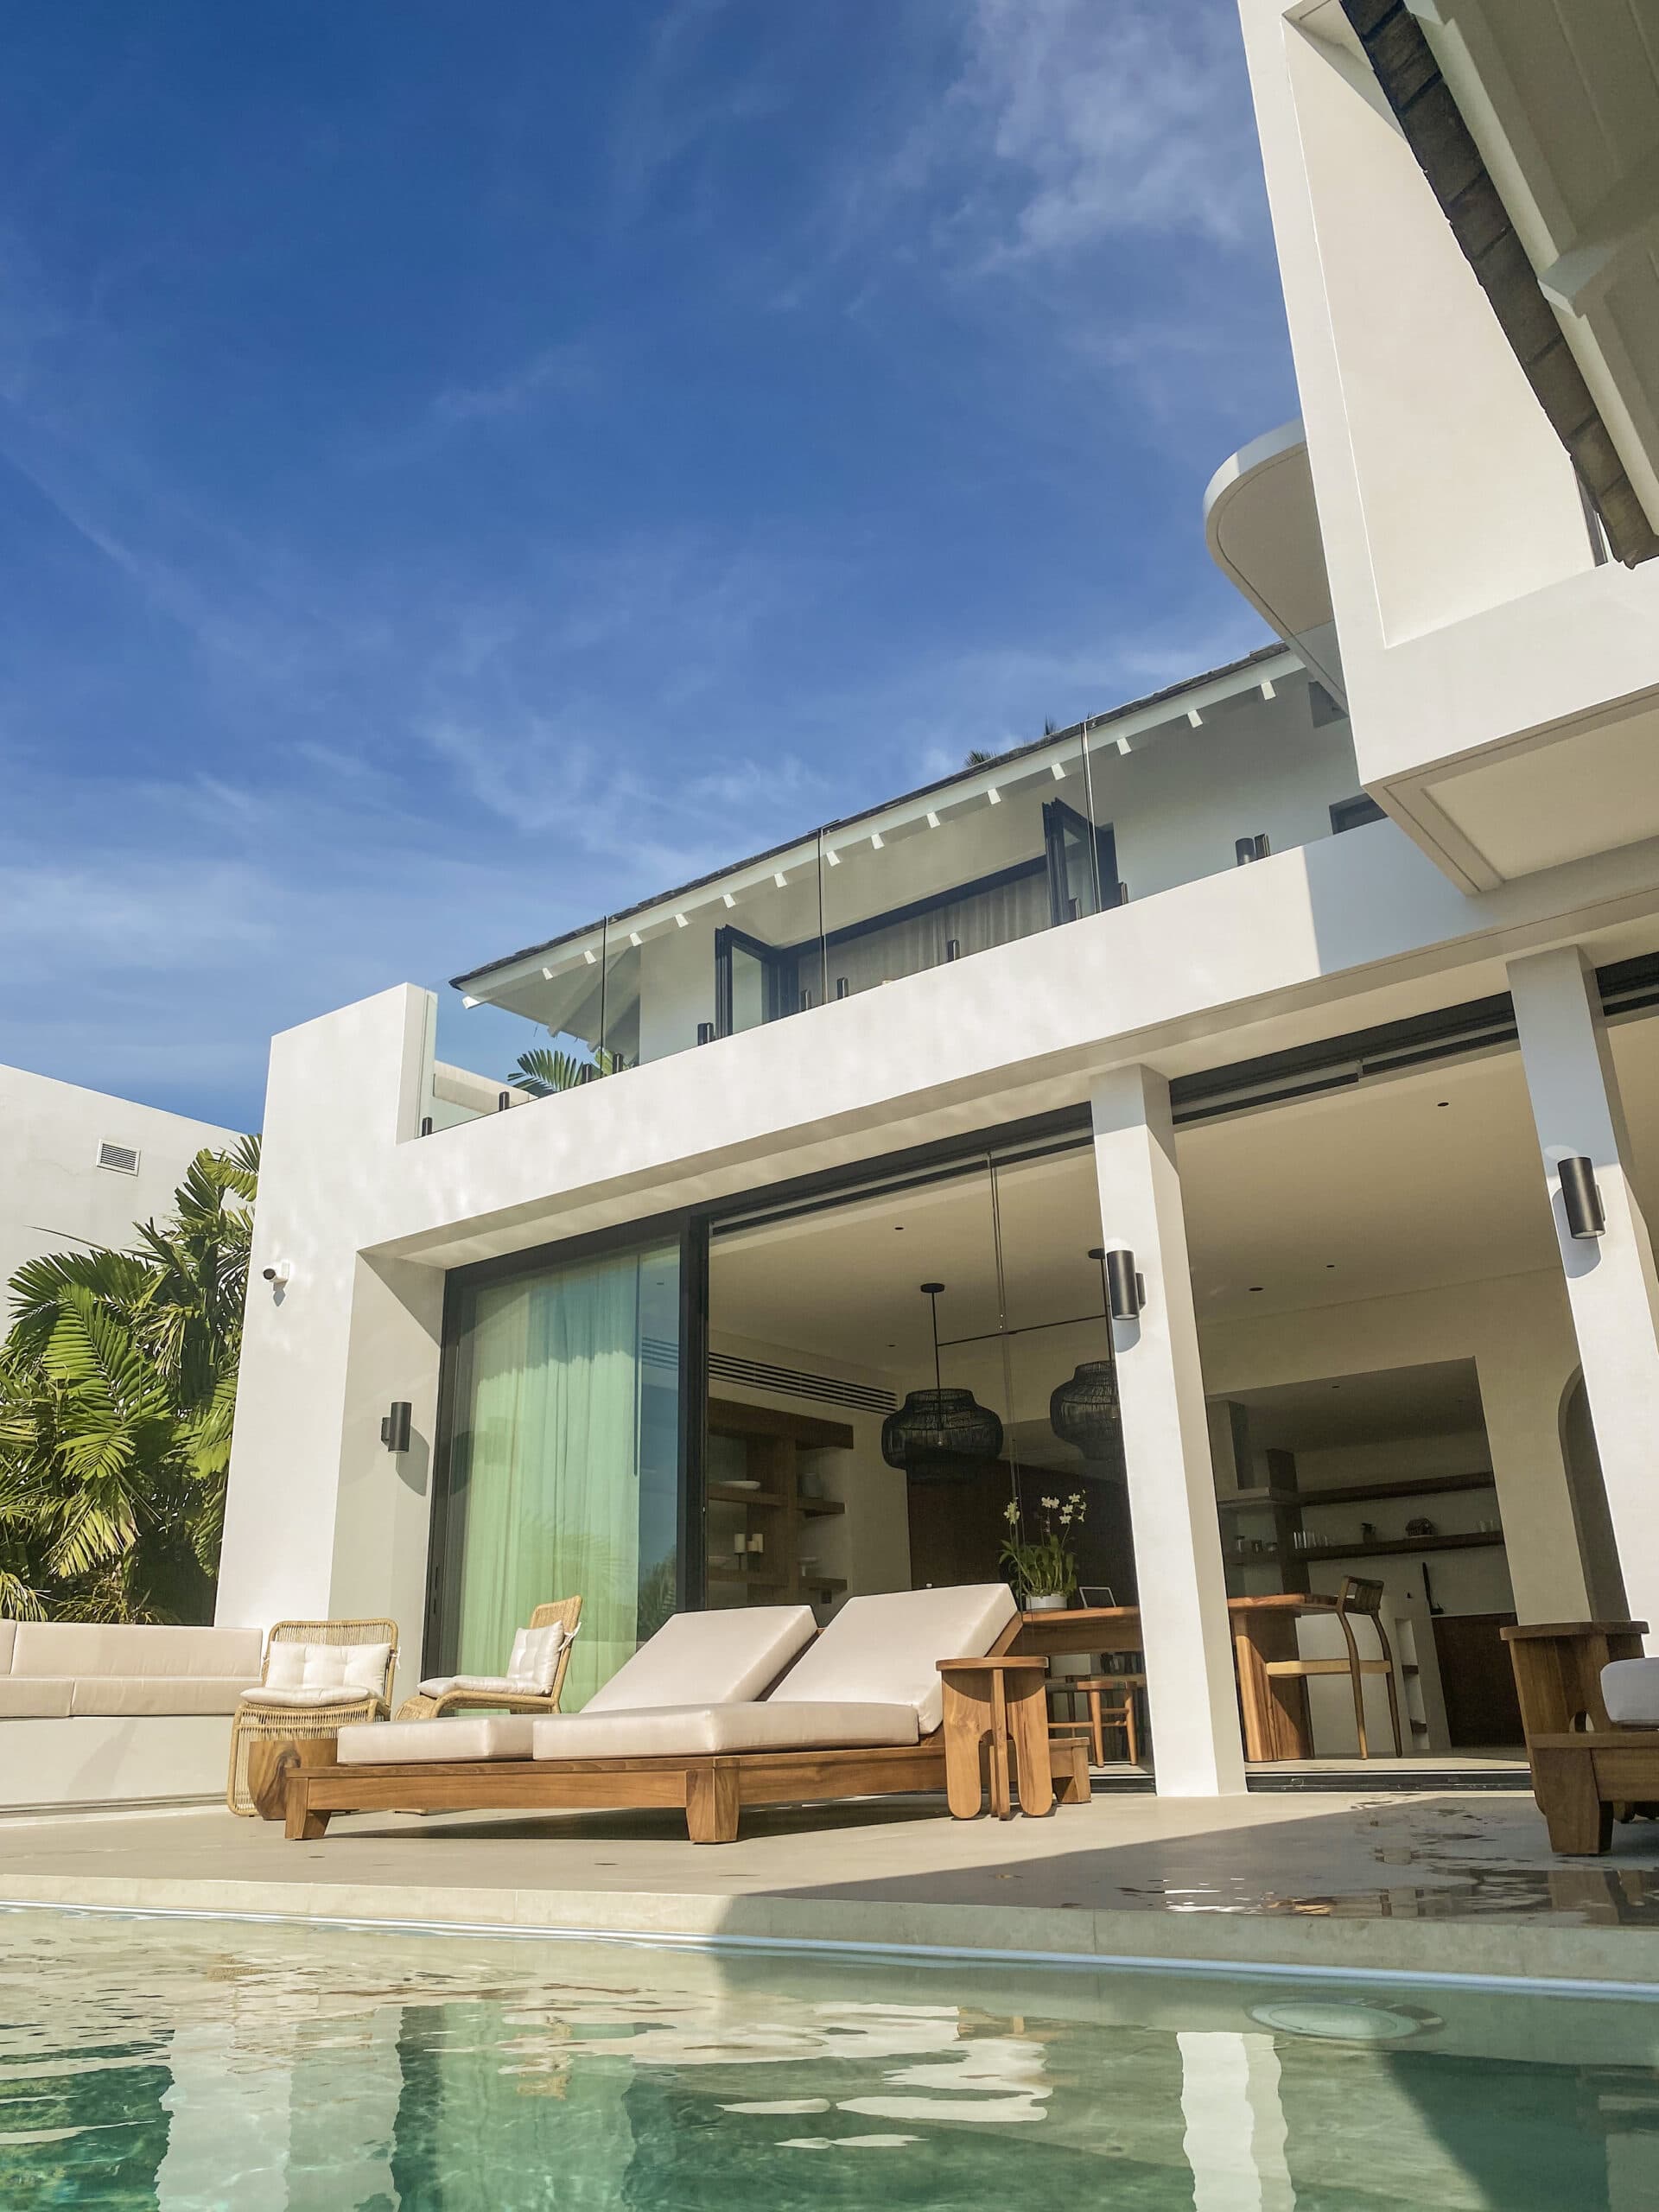 Design Assembly - Surin Villa Phuket - Bali Architect - Interior Design - Villa - Swimming Pool